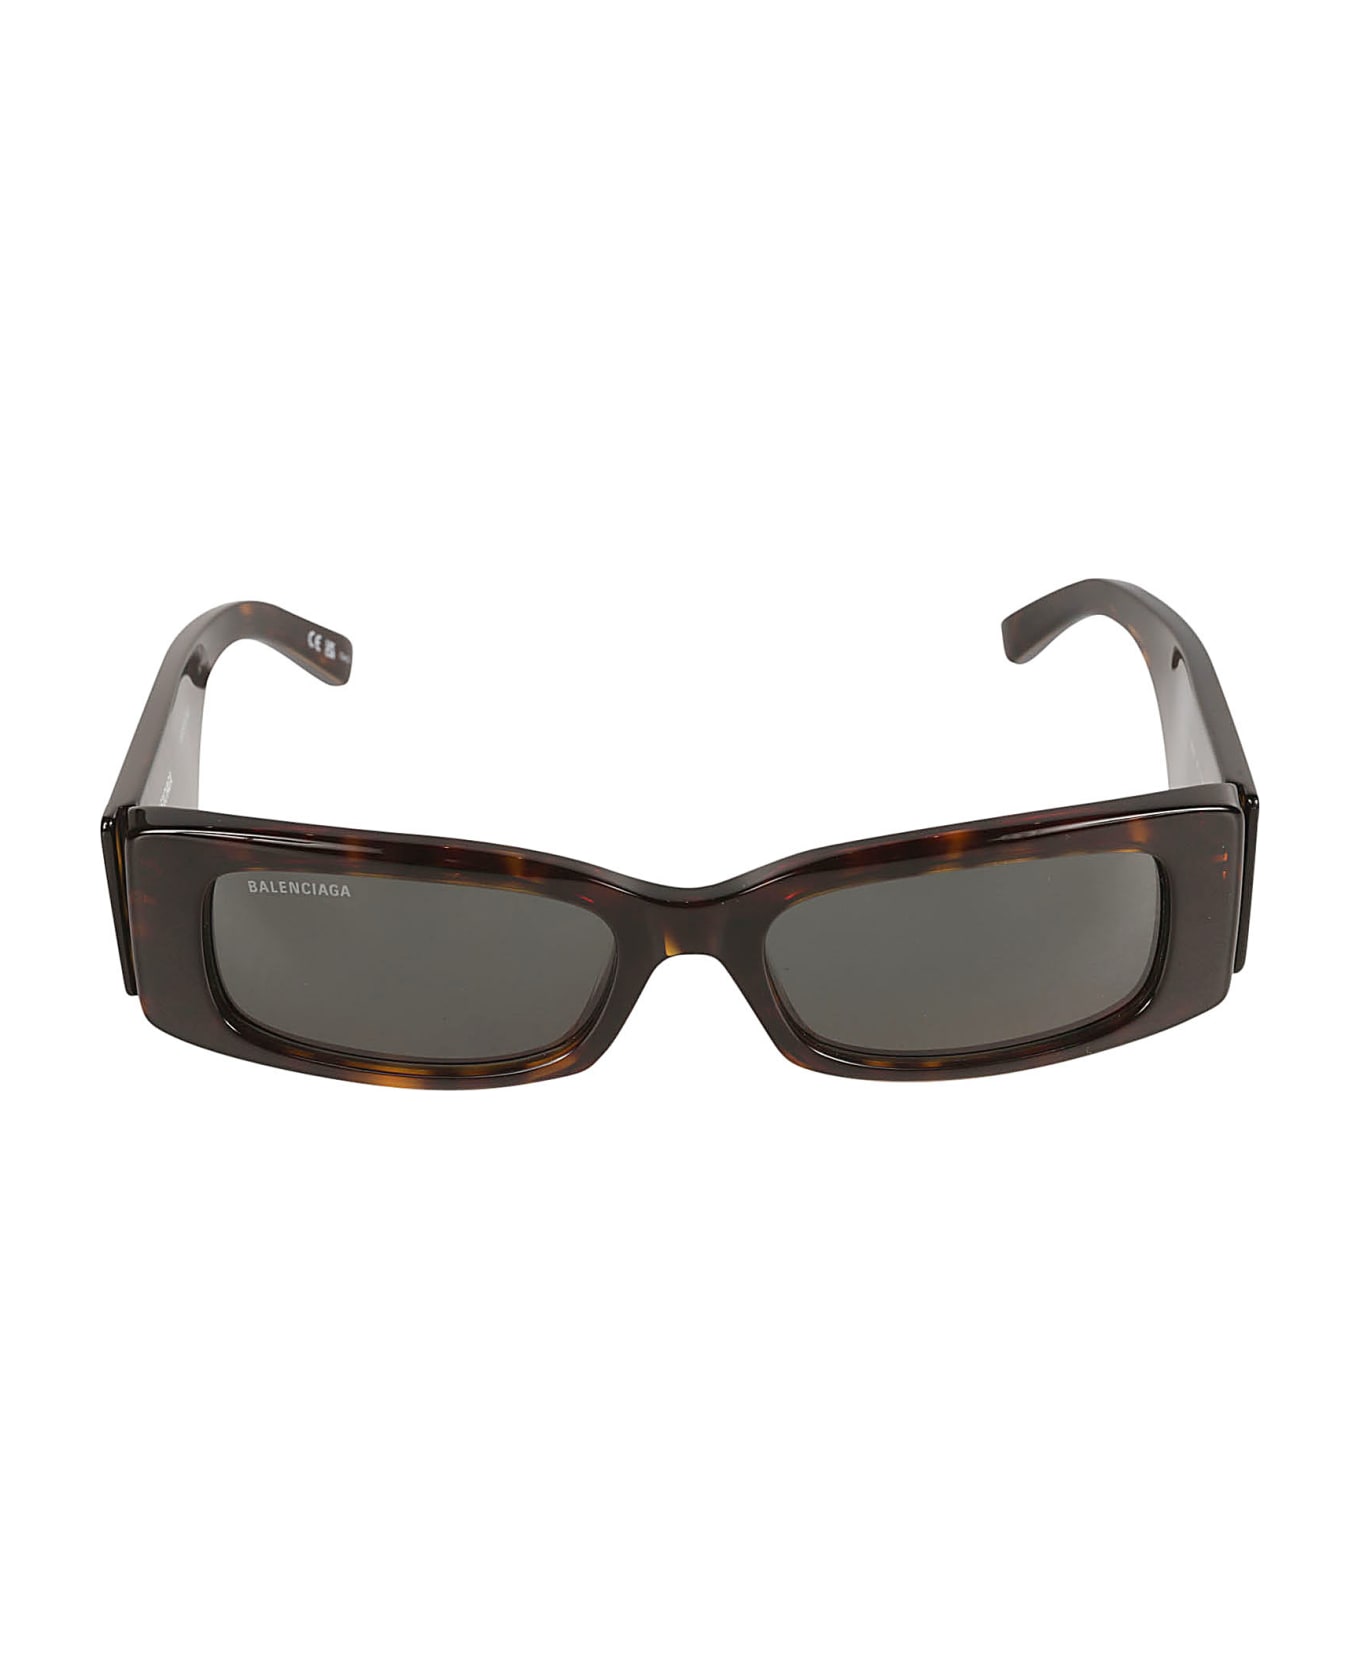 Balenciaga Eyewear Flame Effect Rectangular Sunglasses - Havana/Green